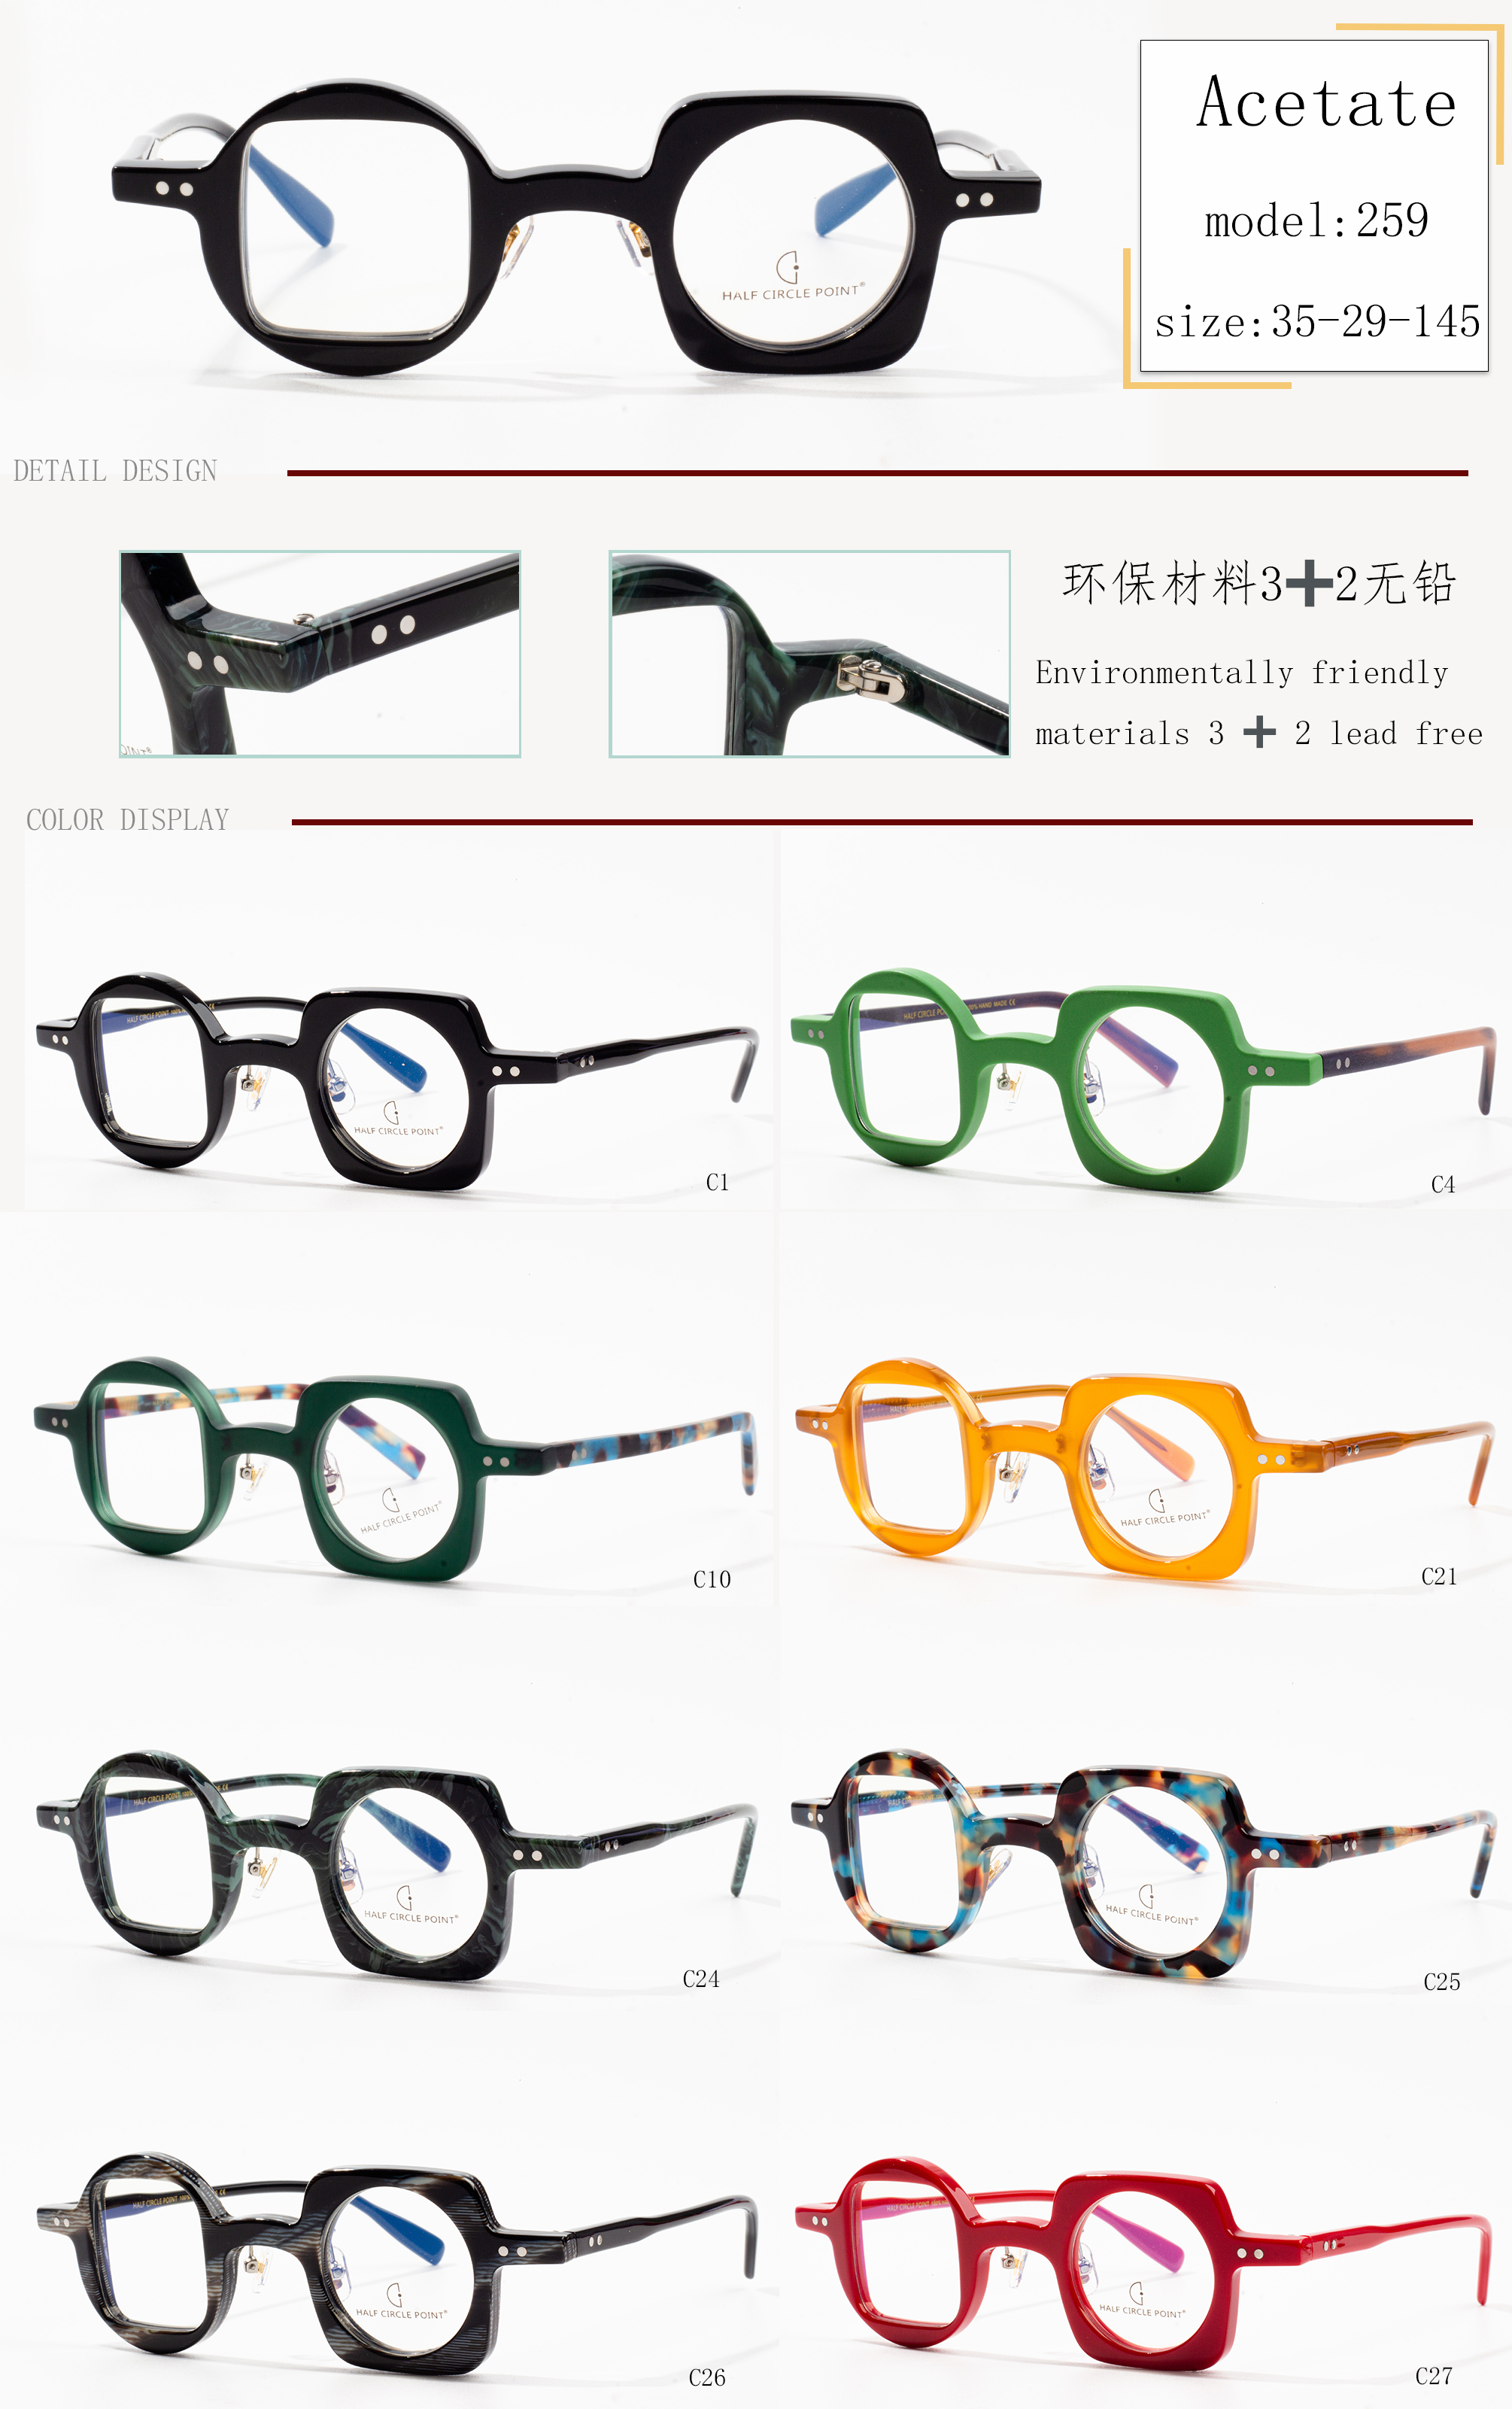 montature per occhiali europee